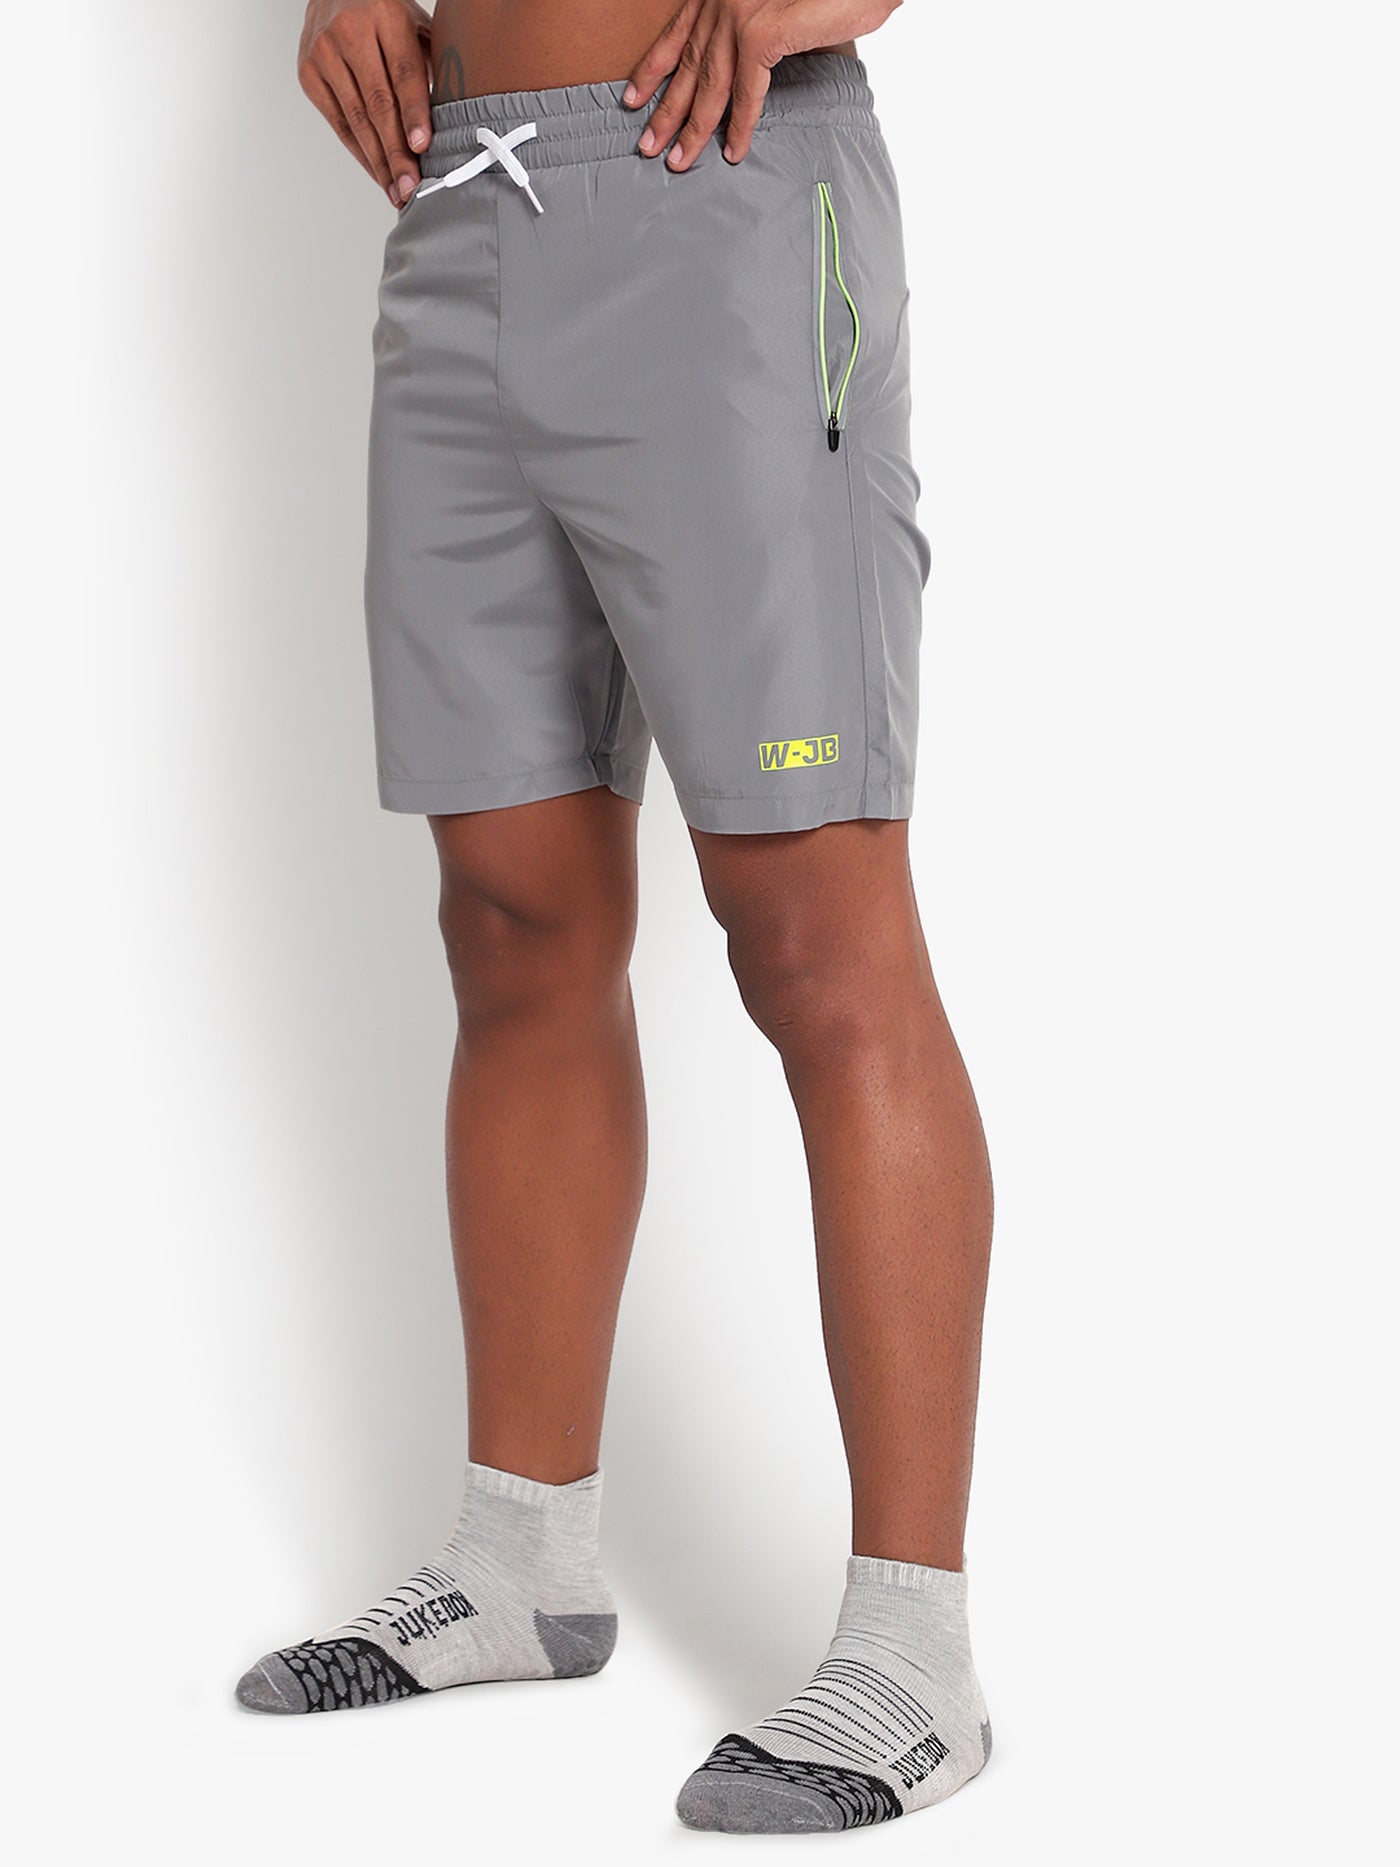 Speed Core Shorts - Foggy Grey